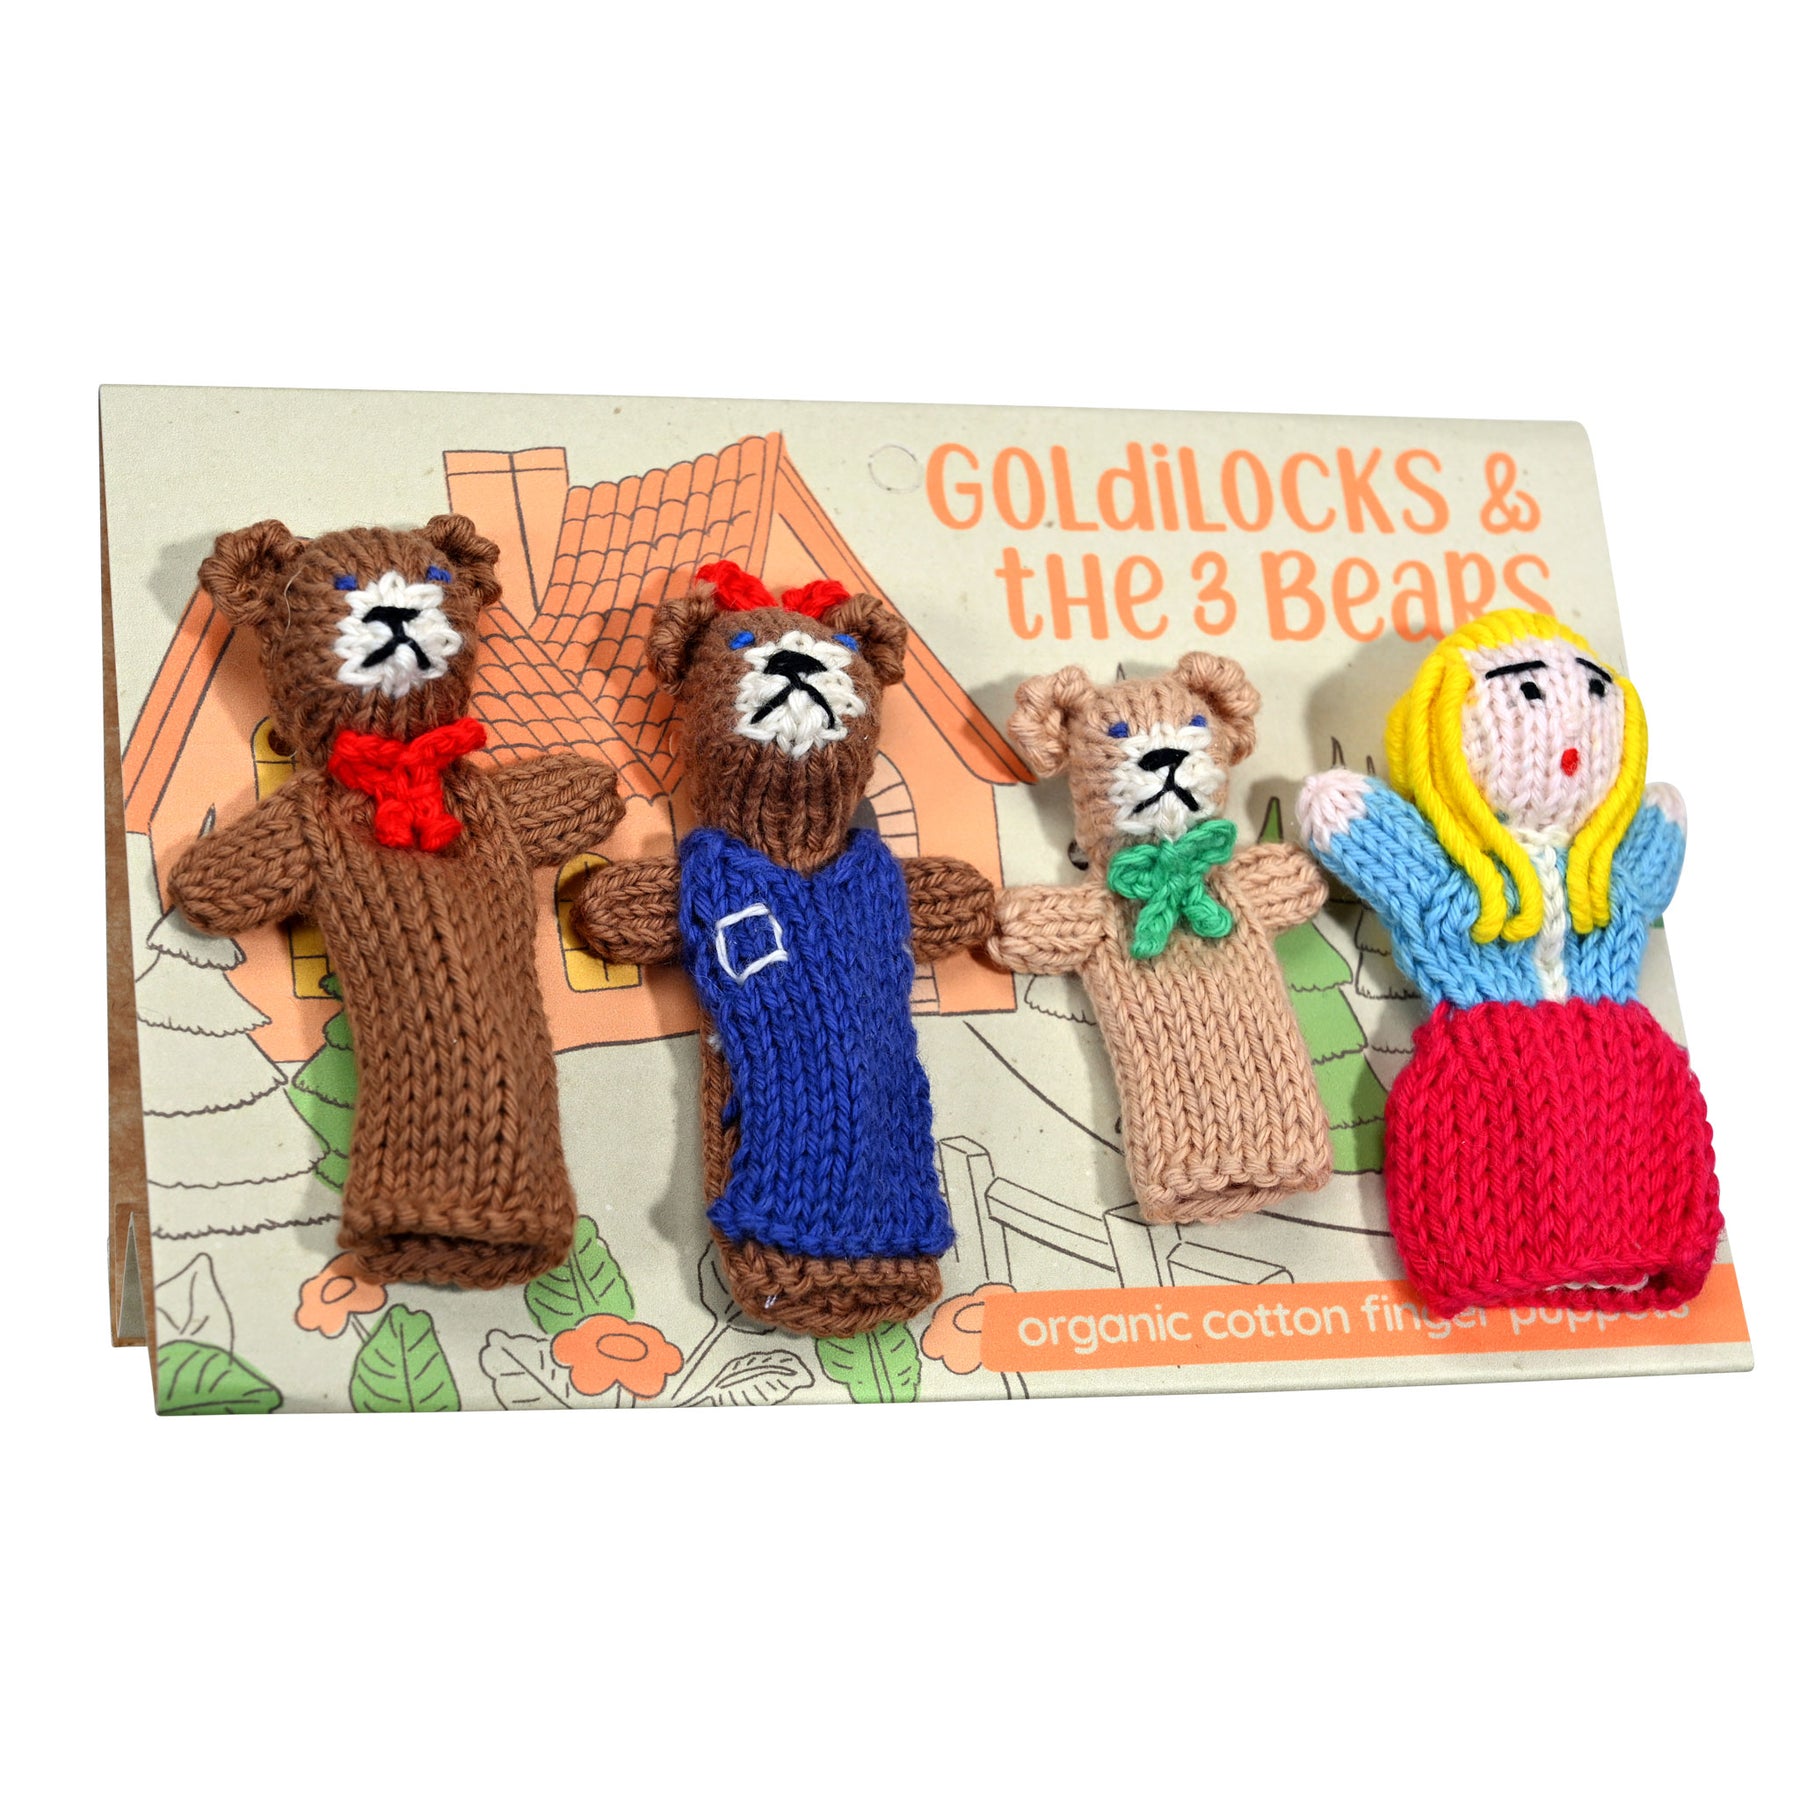 Goldilocks Story Pack of 4 - Organic Cotton Finger Puppets